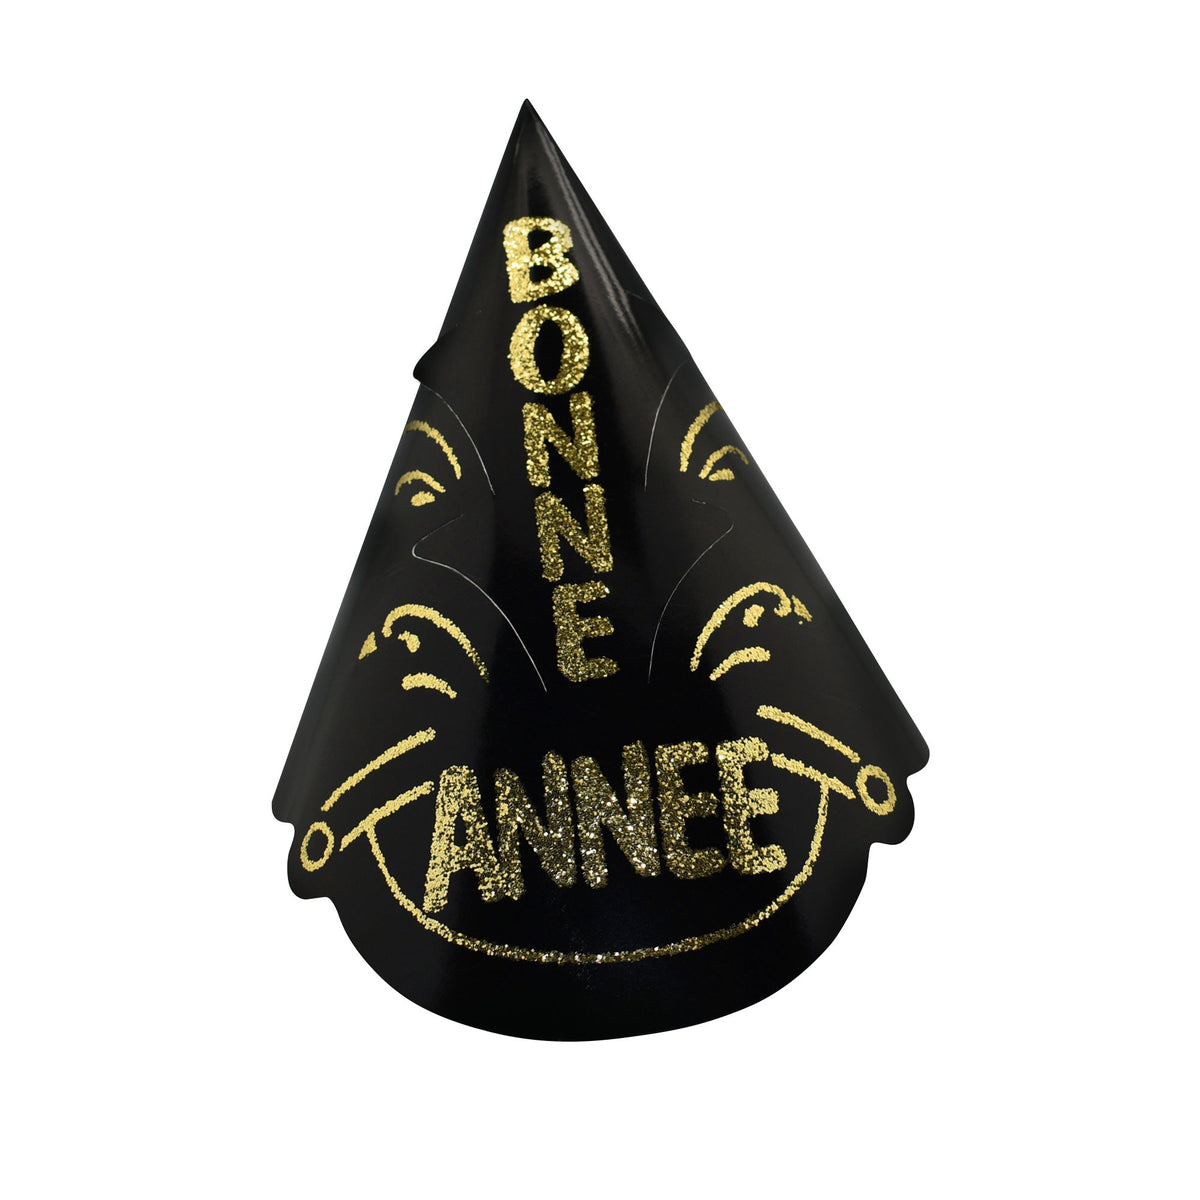 PARTY TIME MFG New Year "Bonne Année" Glitter Black Foil Hat, 1 Count